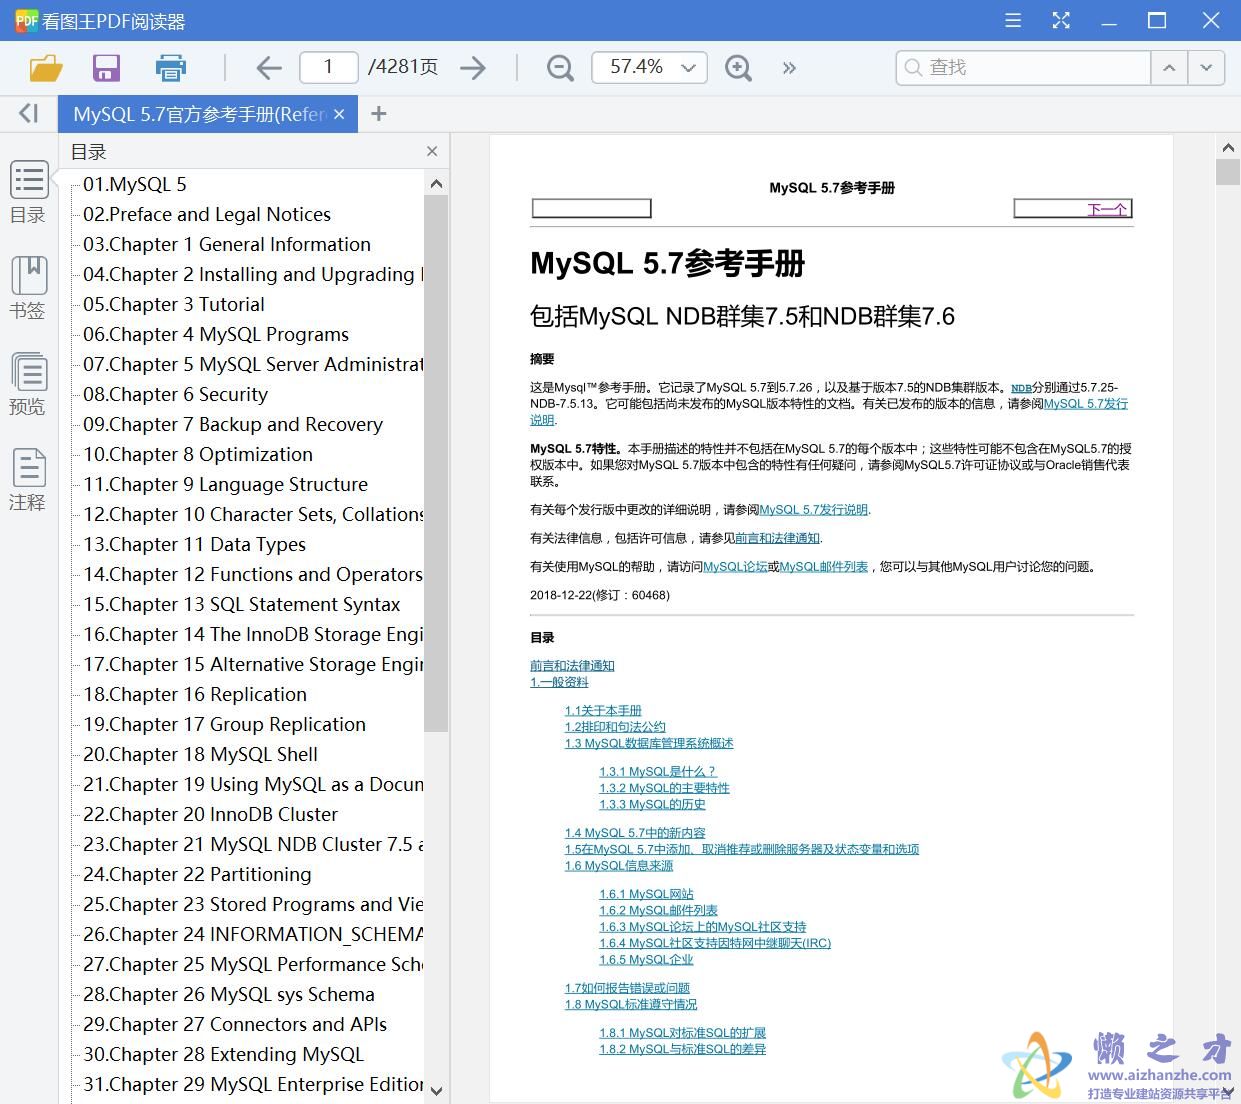 MySQL 5.7官方参考手册(Reference Manual)[PDF][43.68MB]